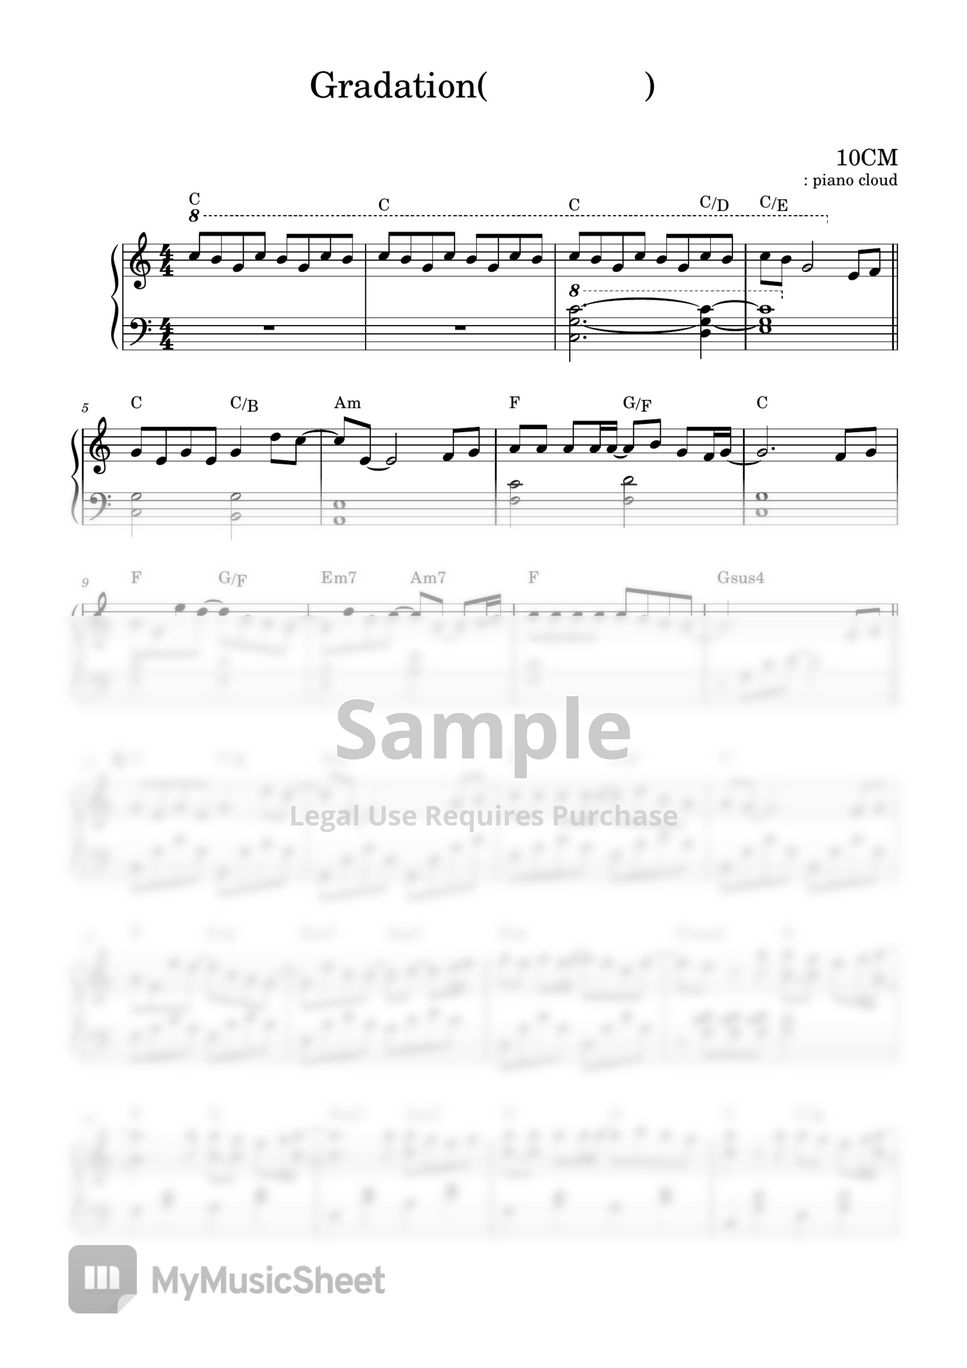 10CM - Gradation (10CM_Gradation/Ckey) by piano cloud